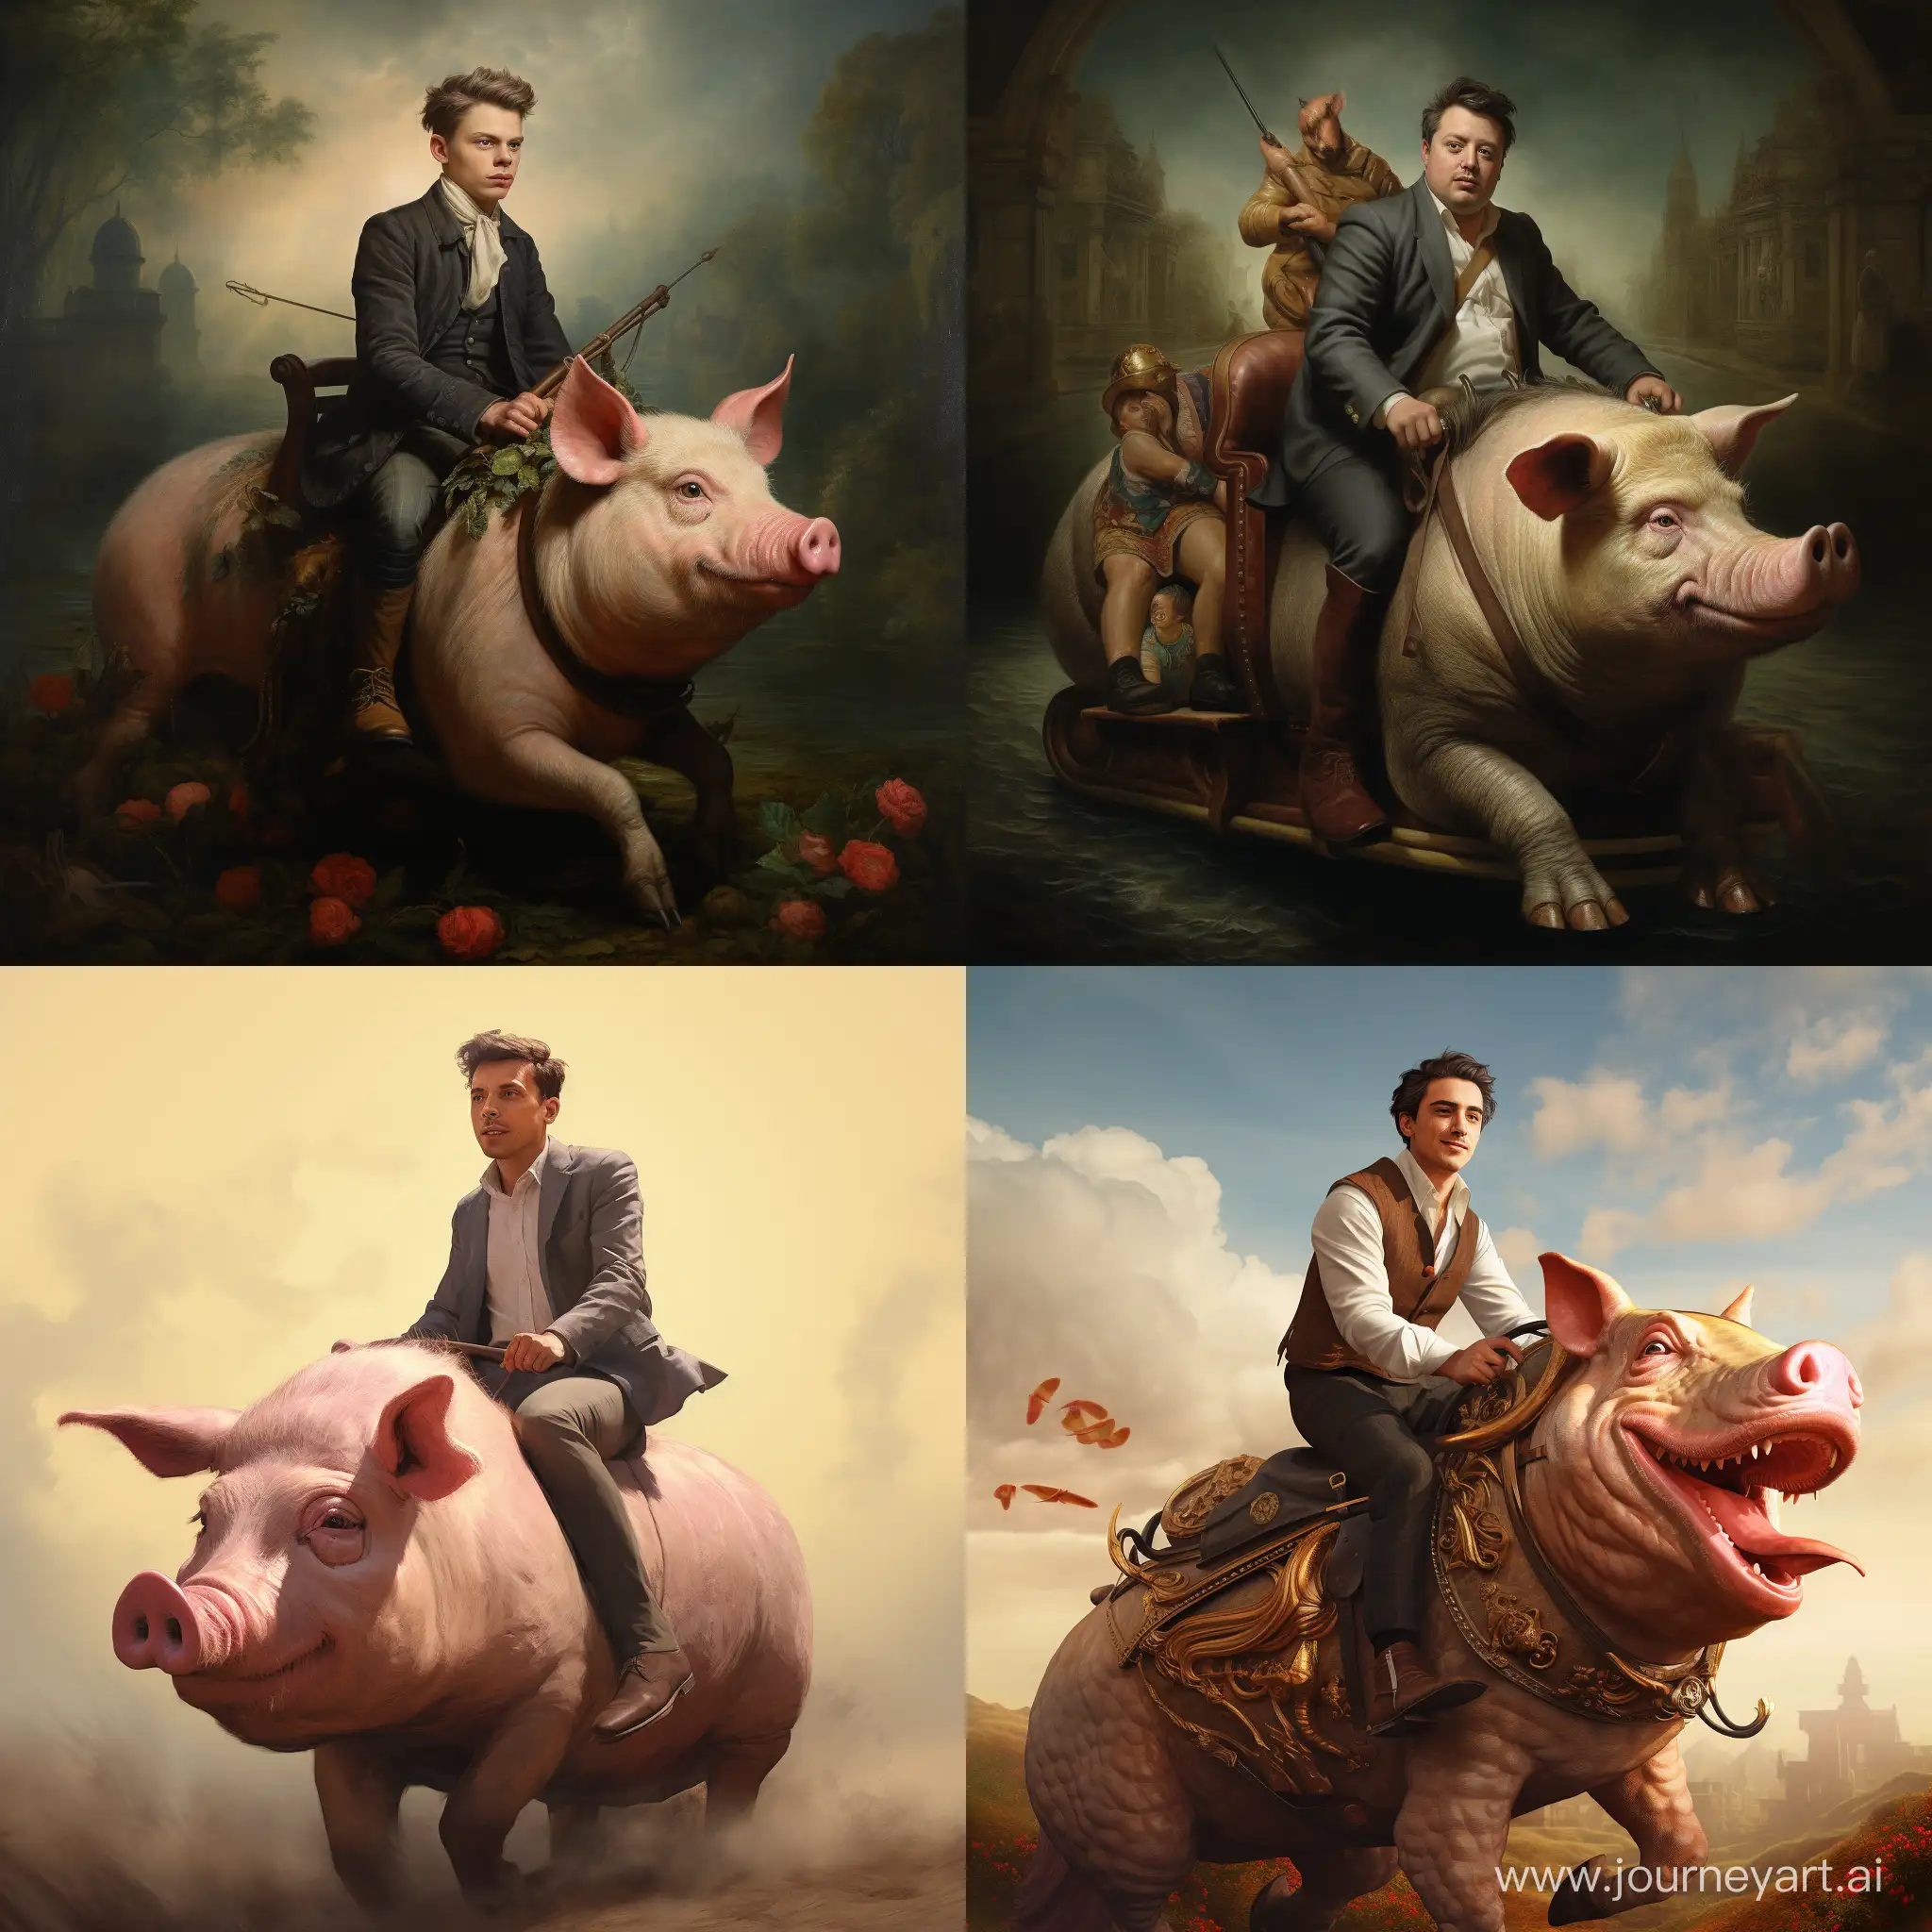 Adventurous-Man-Riding-Pig-in-a-11-Aspect-Ratio